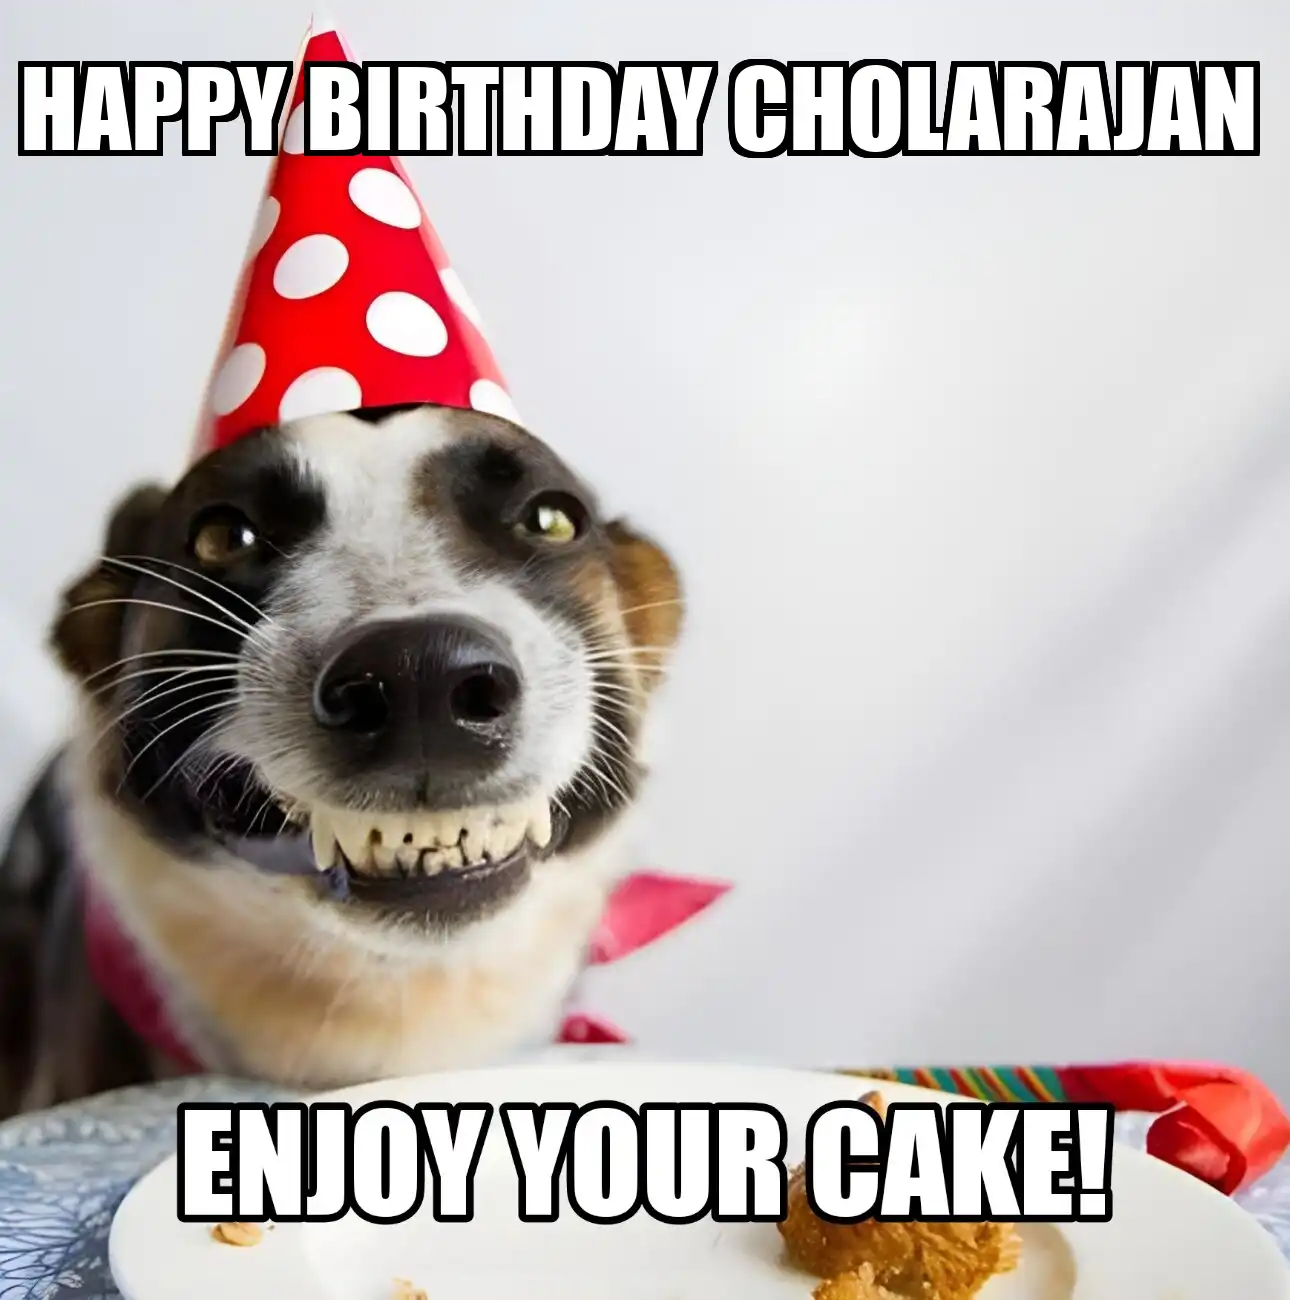 Happy Birthday Cholarajan Enjoy Your Cake Dog Meme